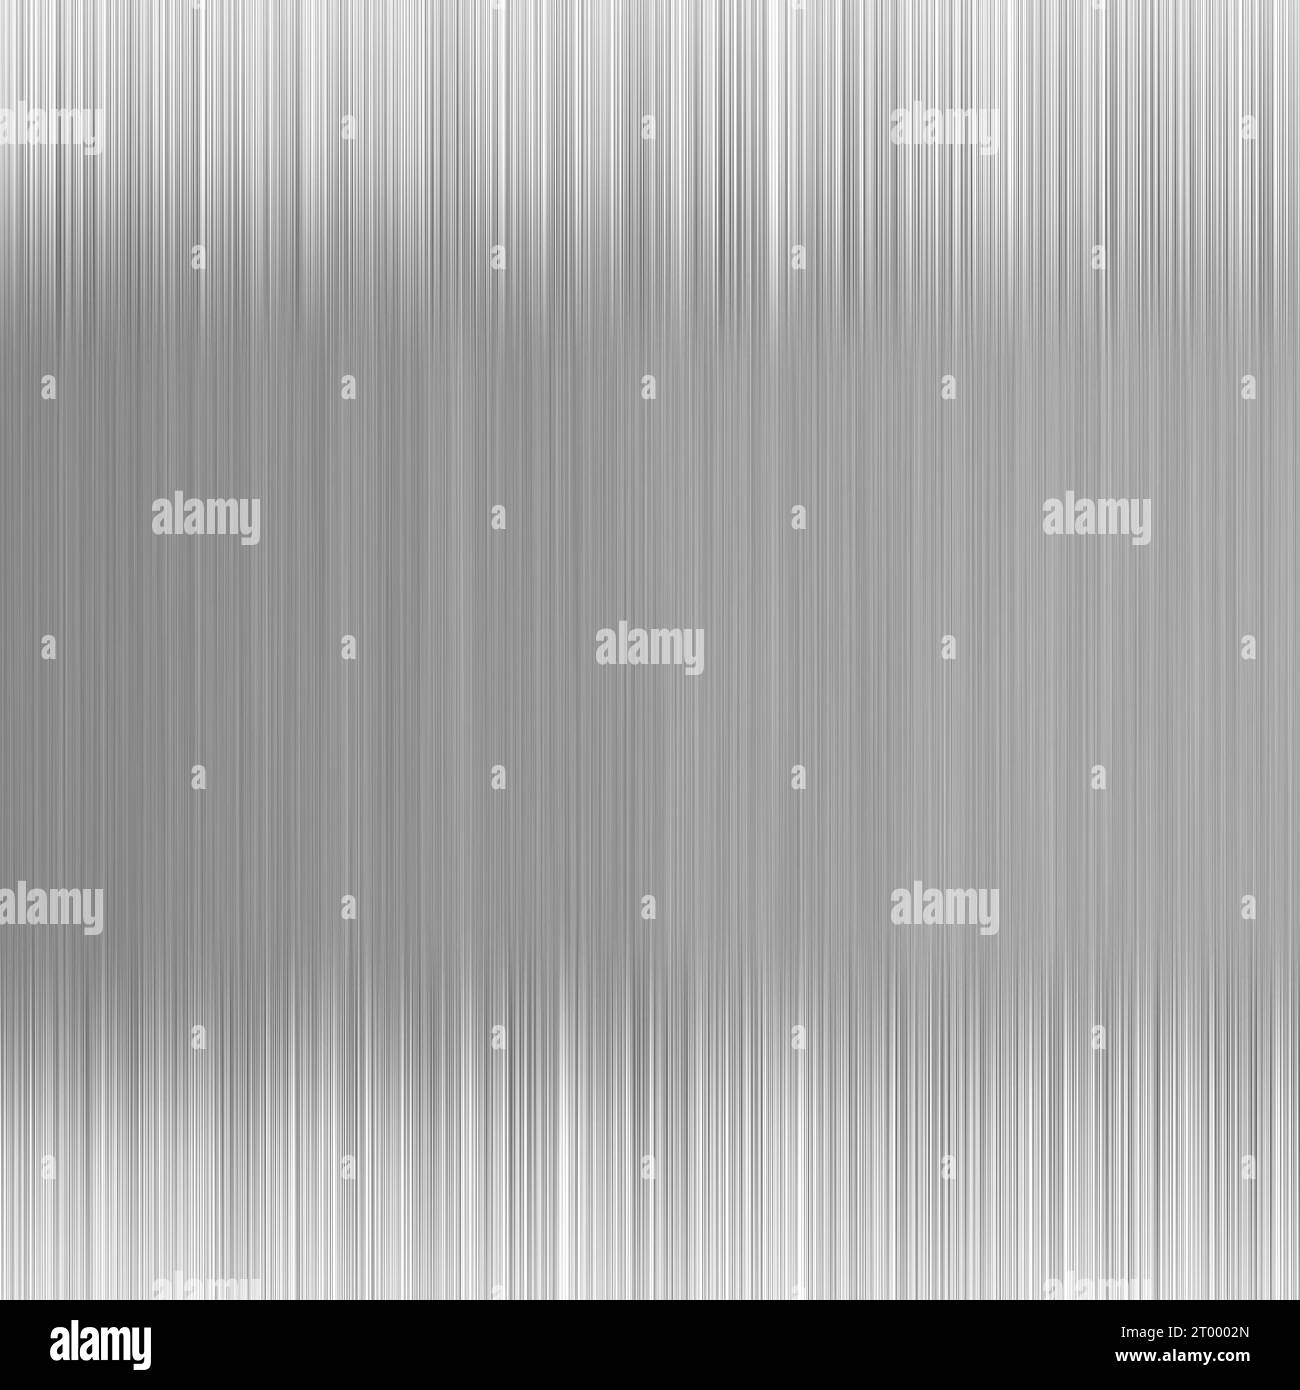 Silver Striped pattern illustration background wallpaper Stock Photo